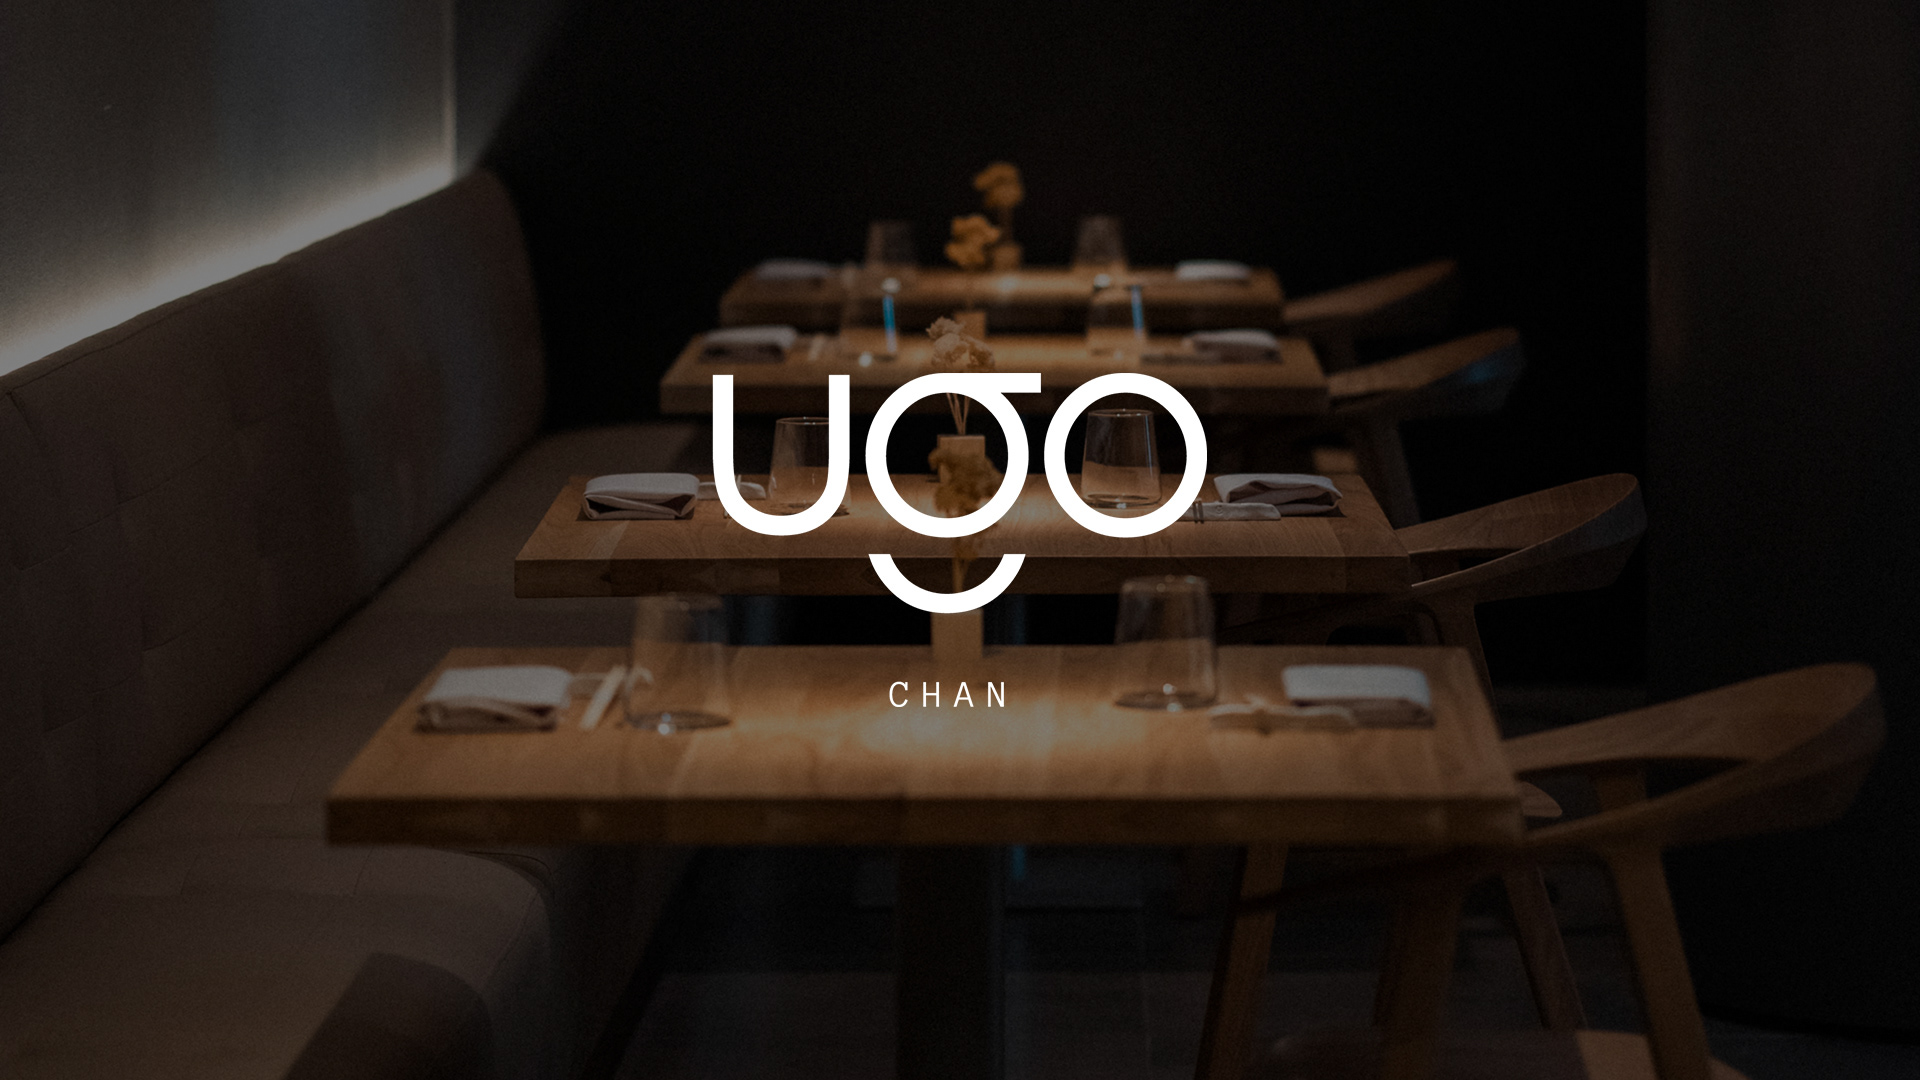 Restaurante Ugo Chan en Madrid